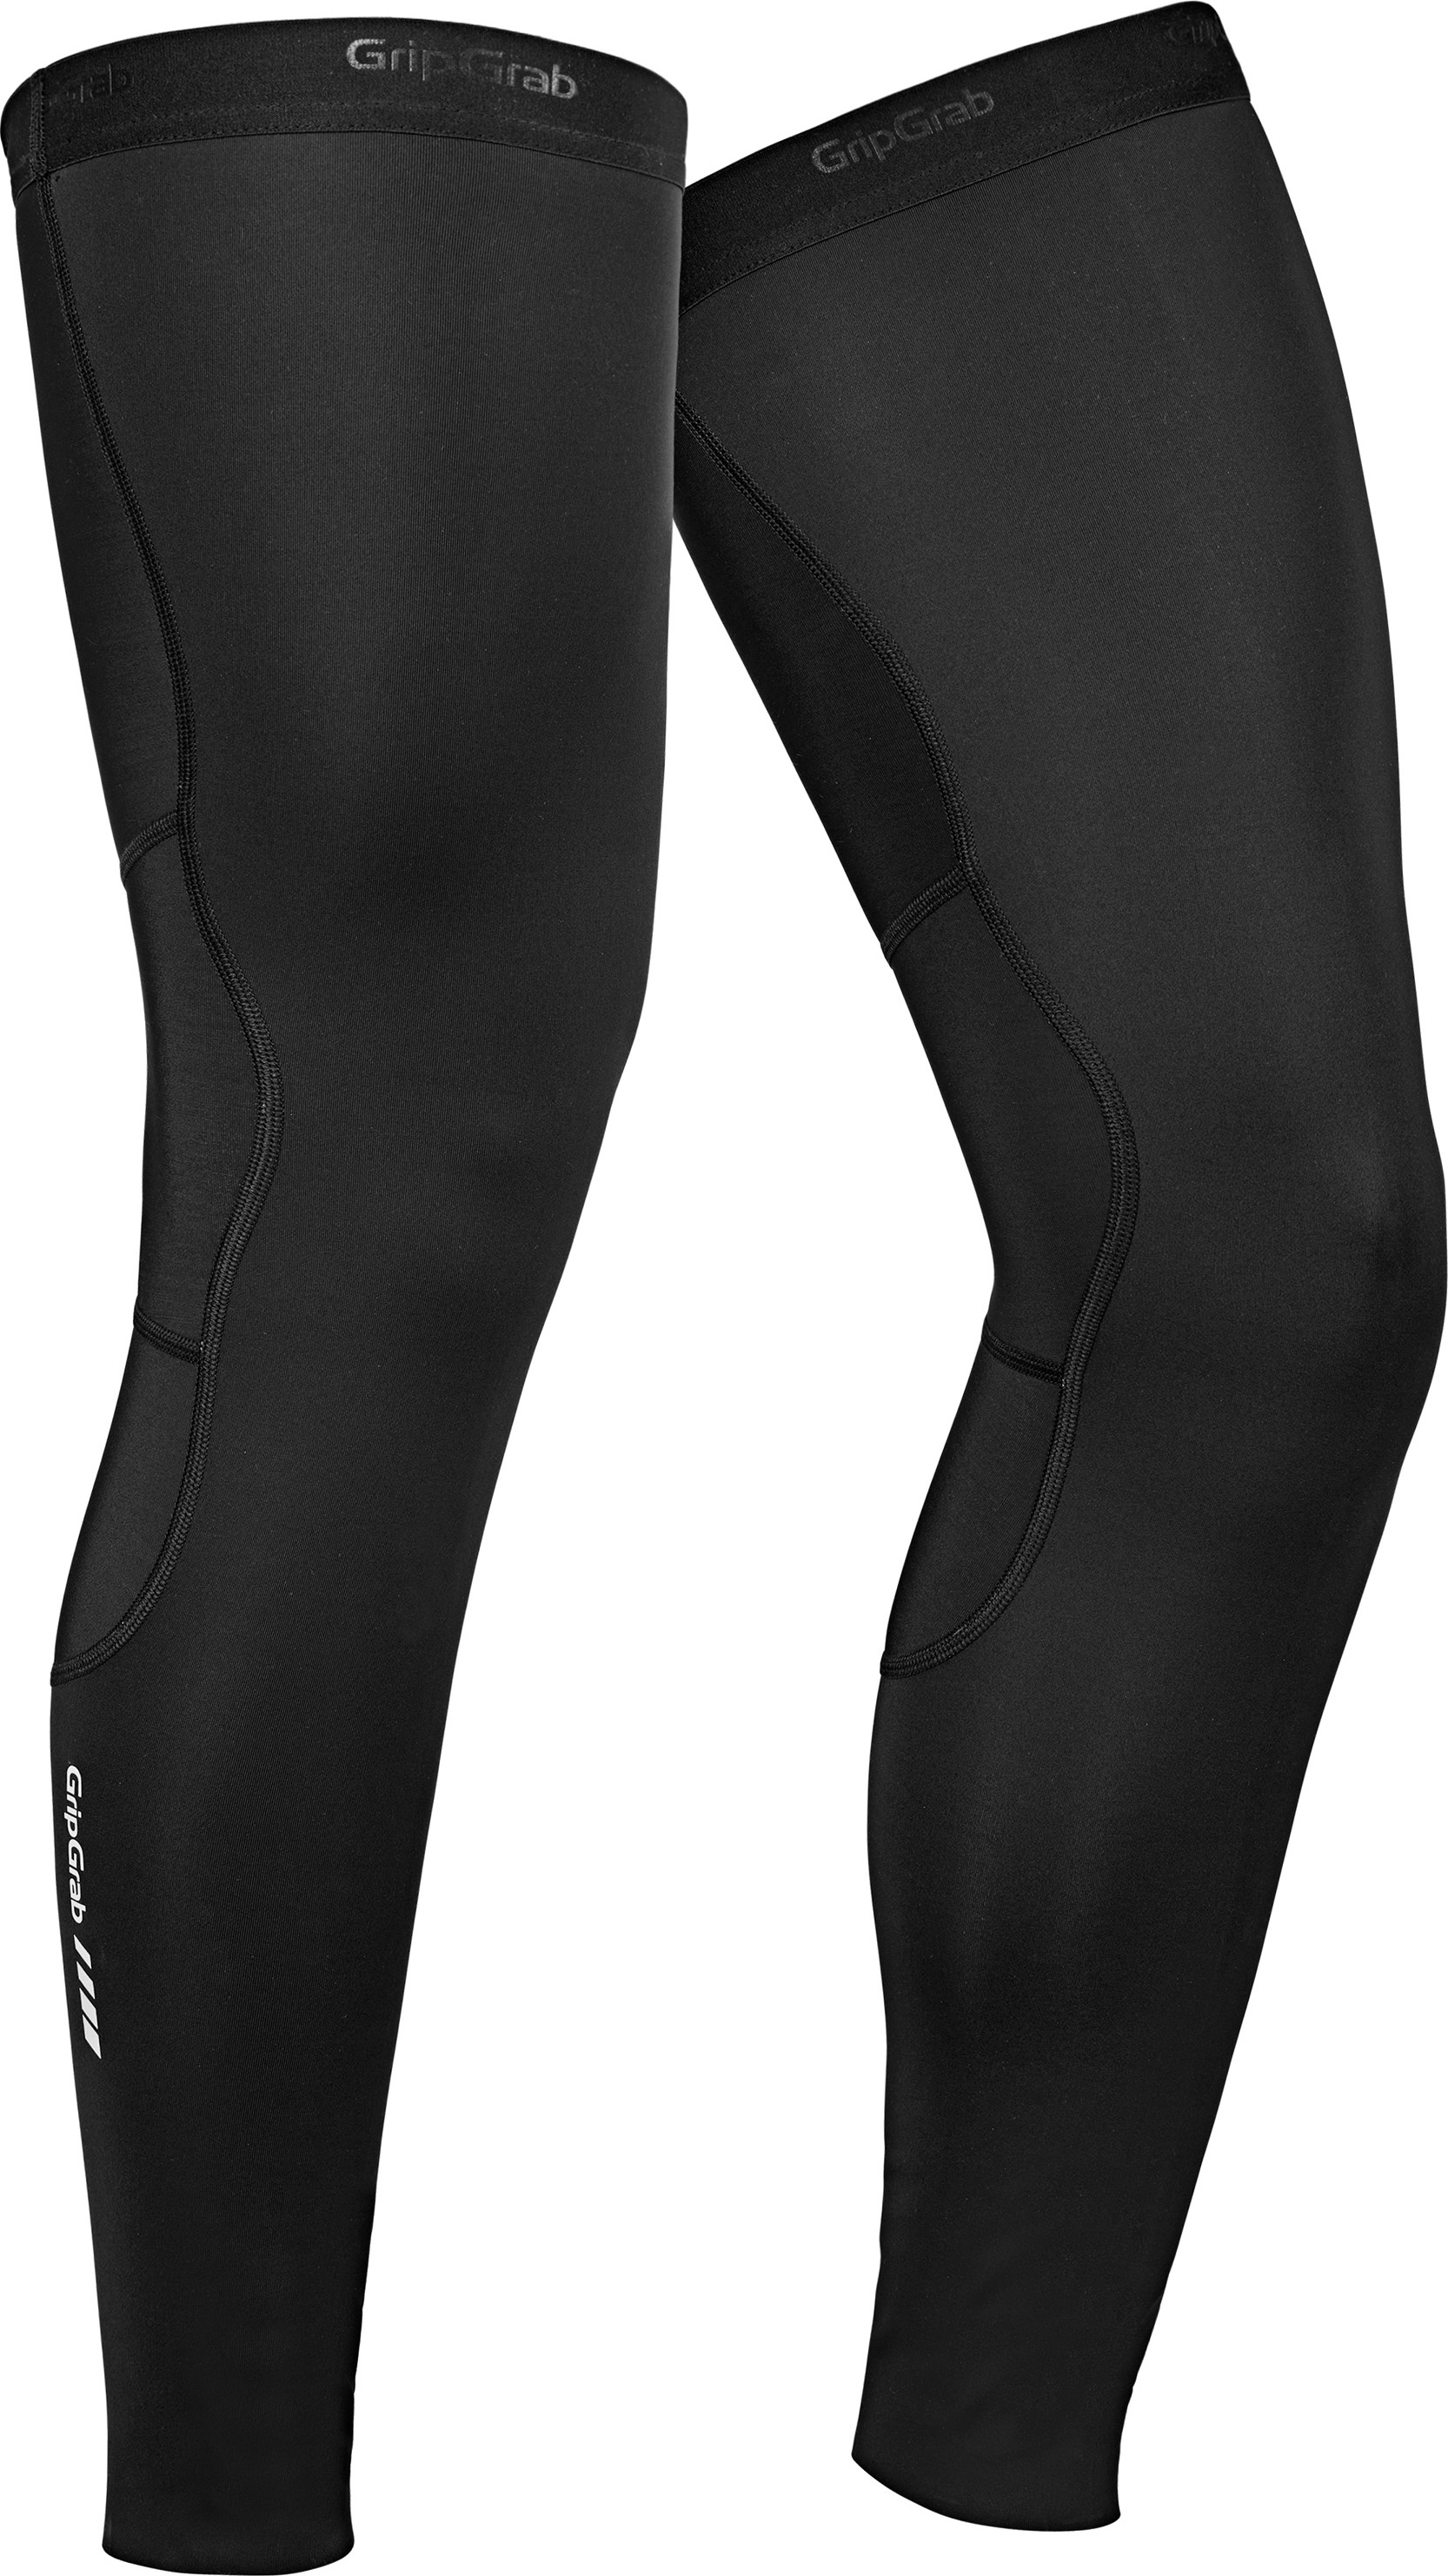 Gripgrab AquaRepel 2 Water-Resistant Leg Warmers Black S, Black